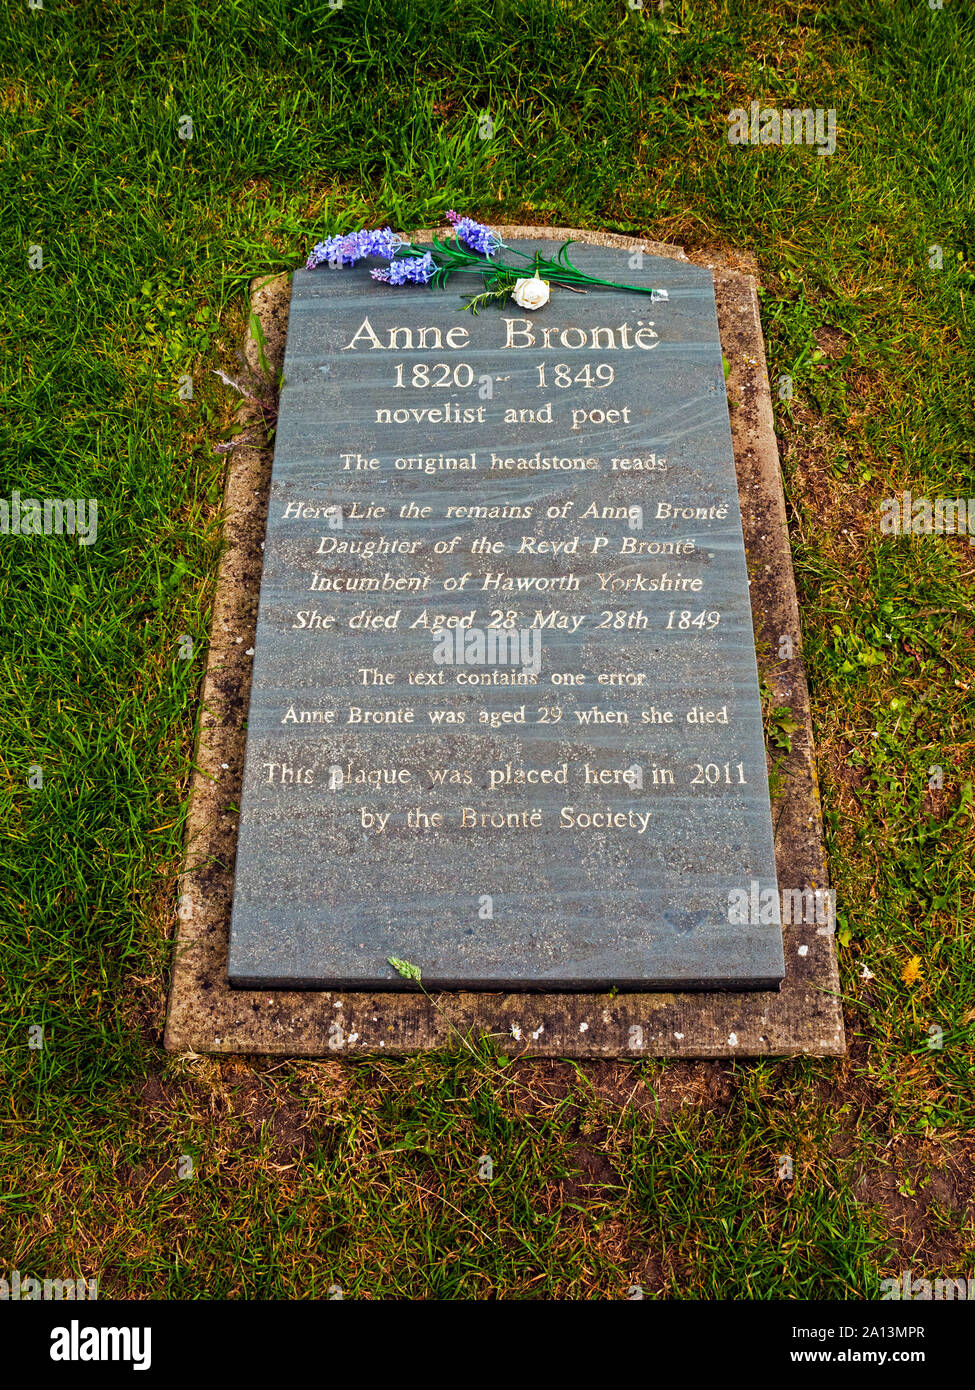 Anne Bronte memorial plaque with original headstone inscription ...